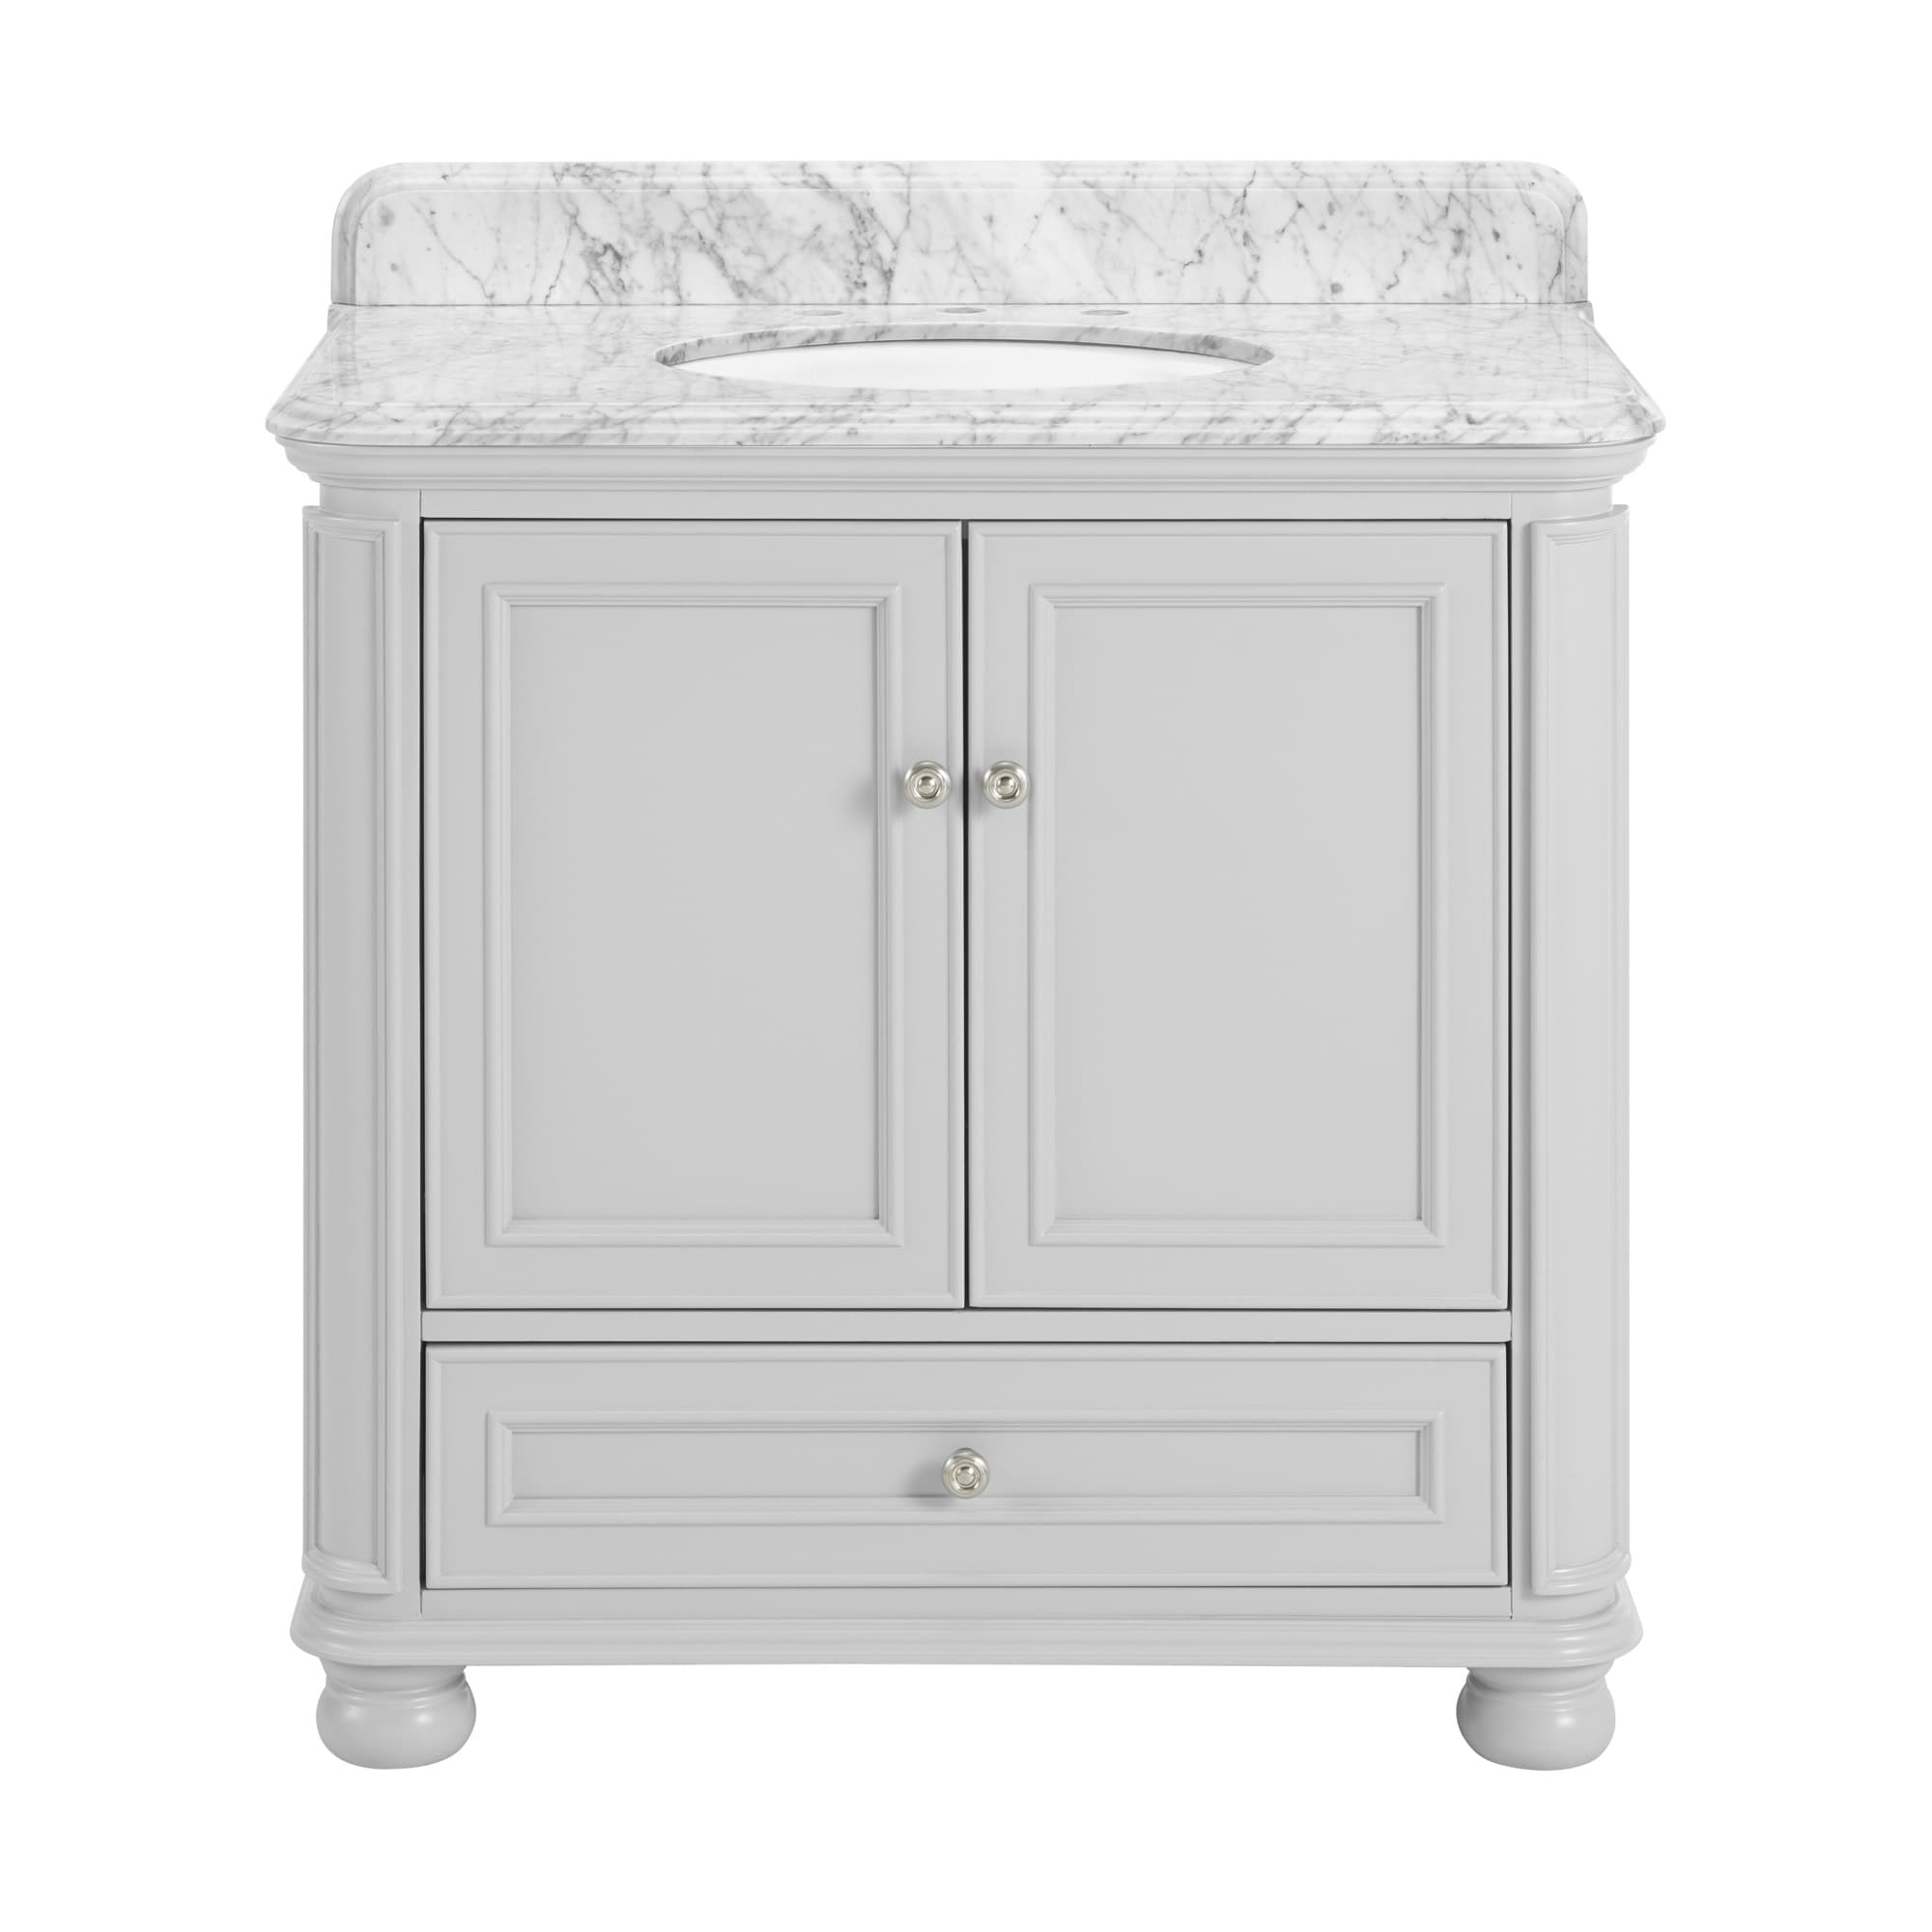 Wrightsville 36-in Light Gray Undermount Single Sink Bathroom Vanity with Carrara Natural Marble Top | - allen + roth 3116VA-36-242-900L